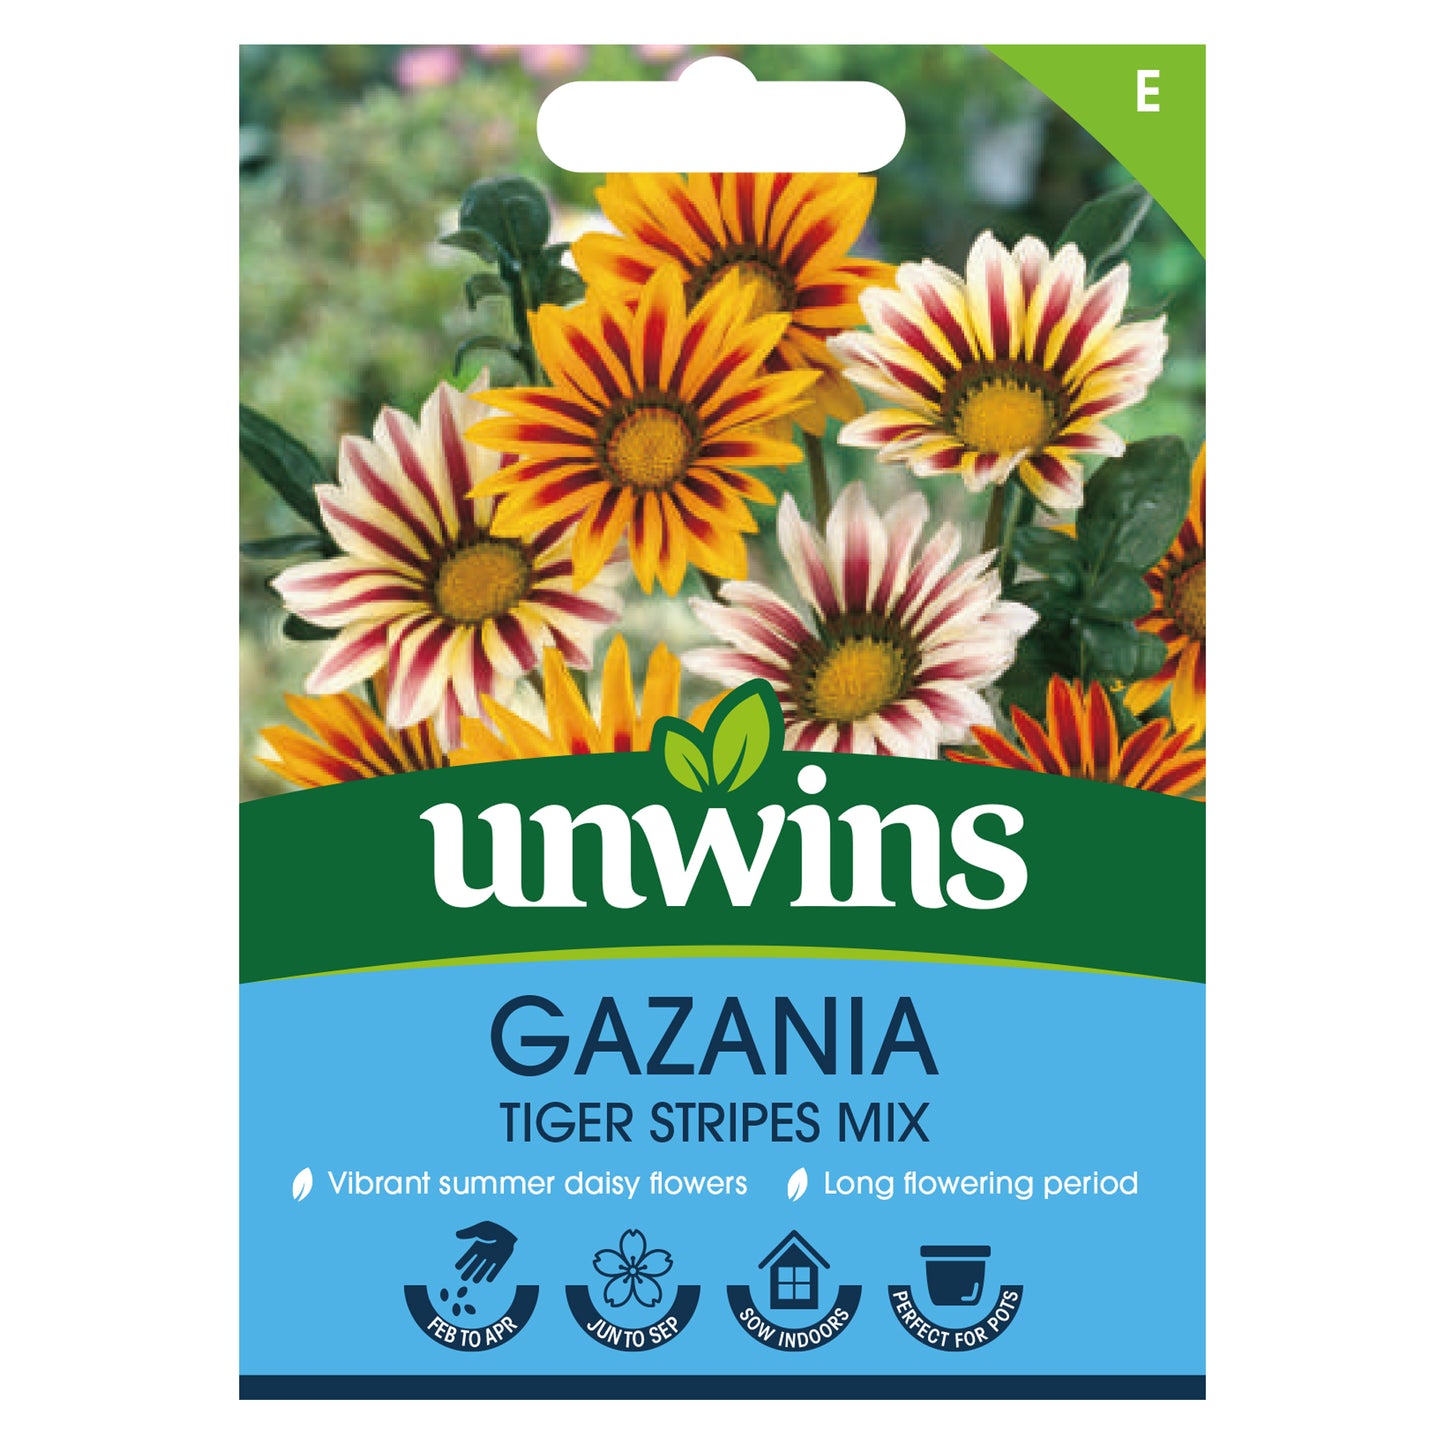 Unwins Gazania Tiger Stripes Mix Seeds front of pack